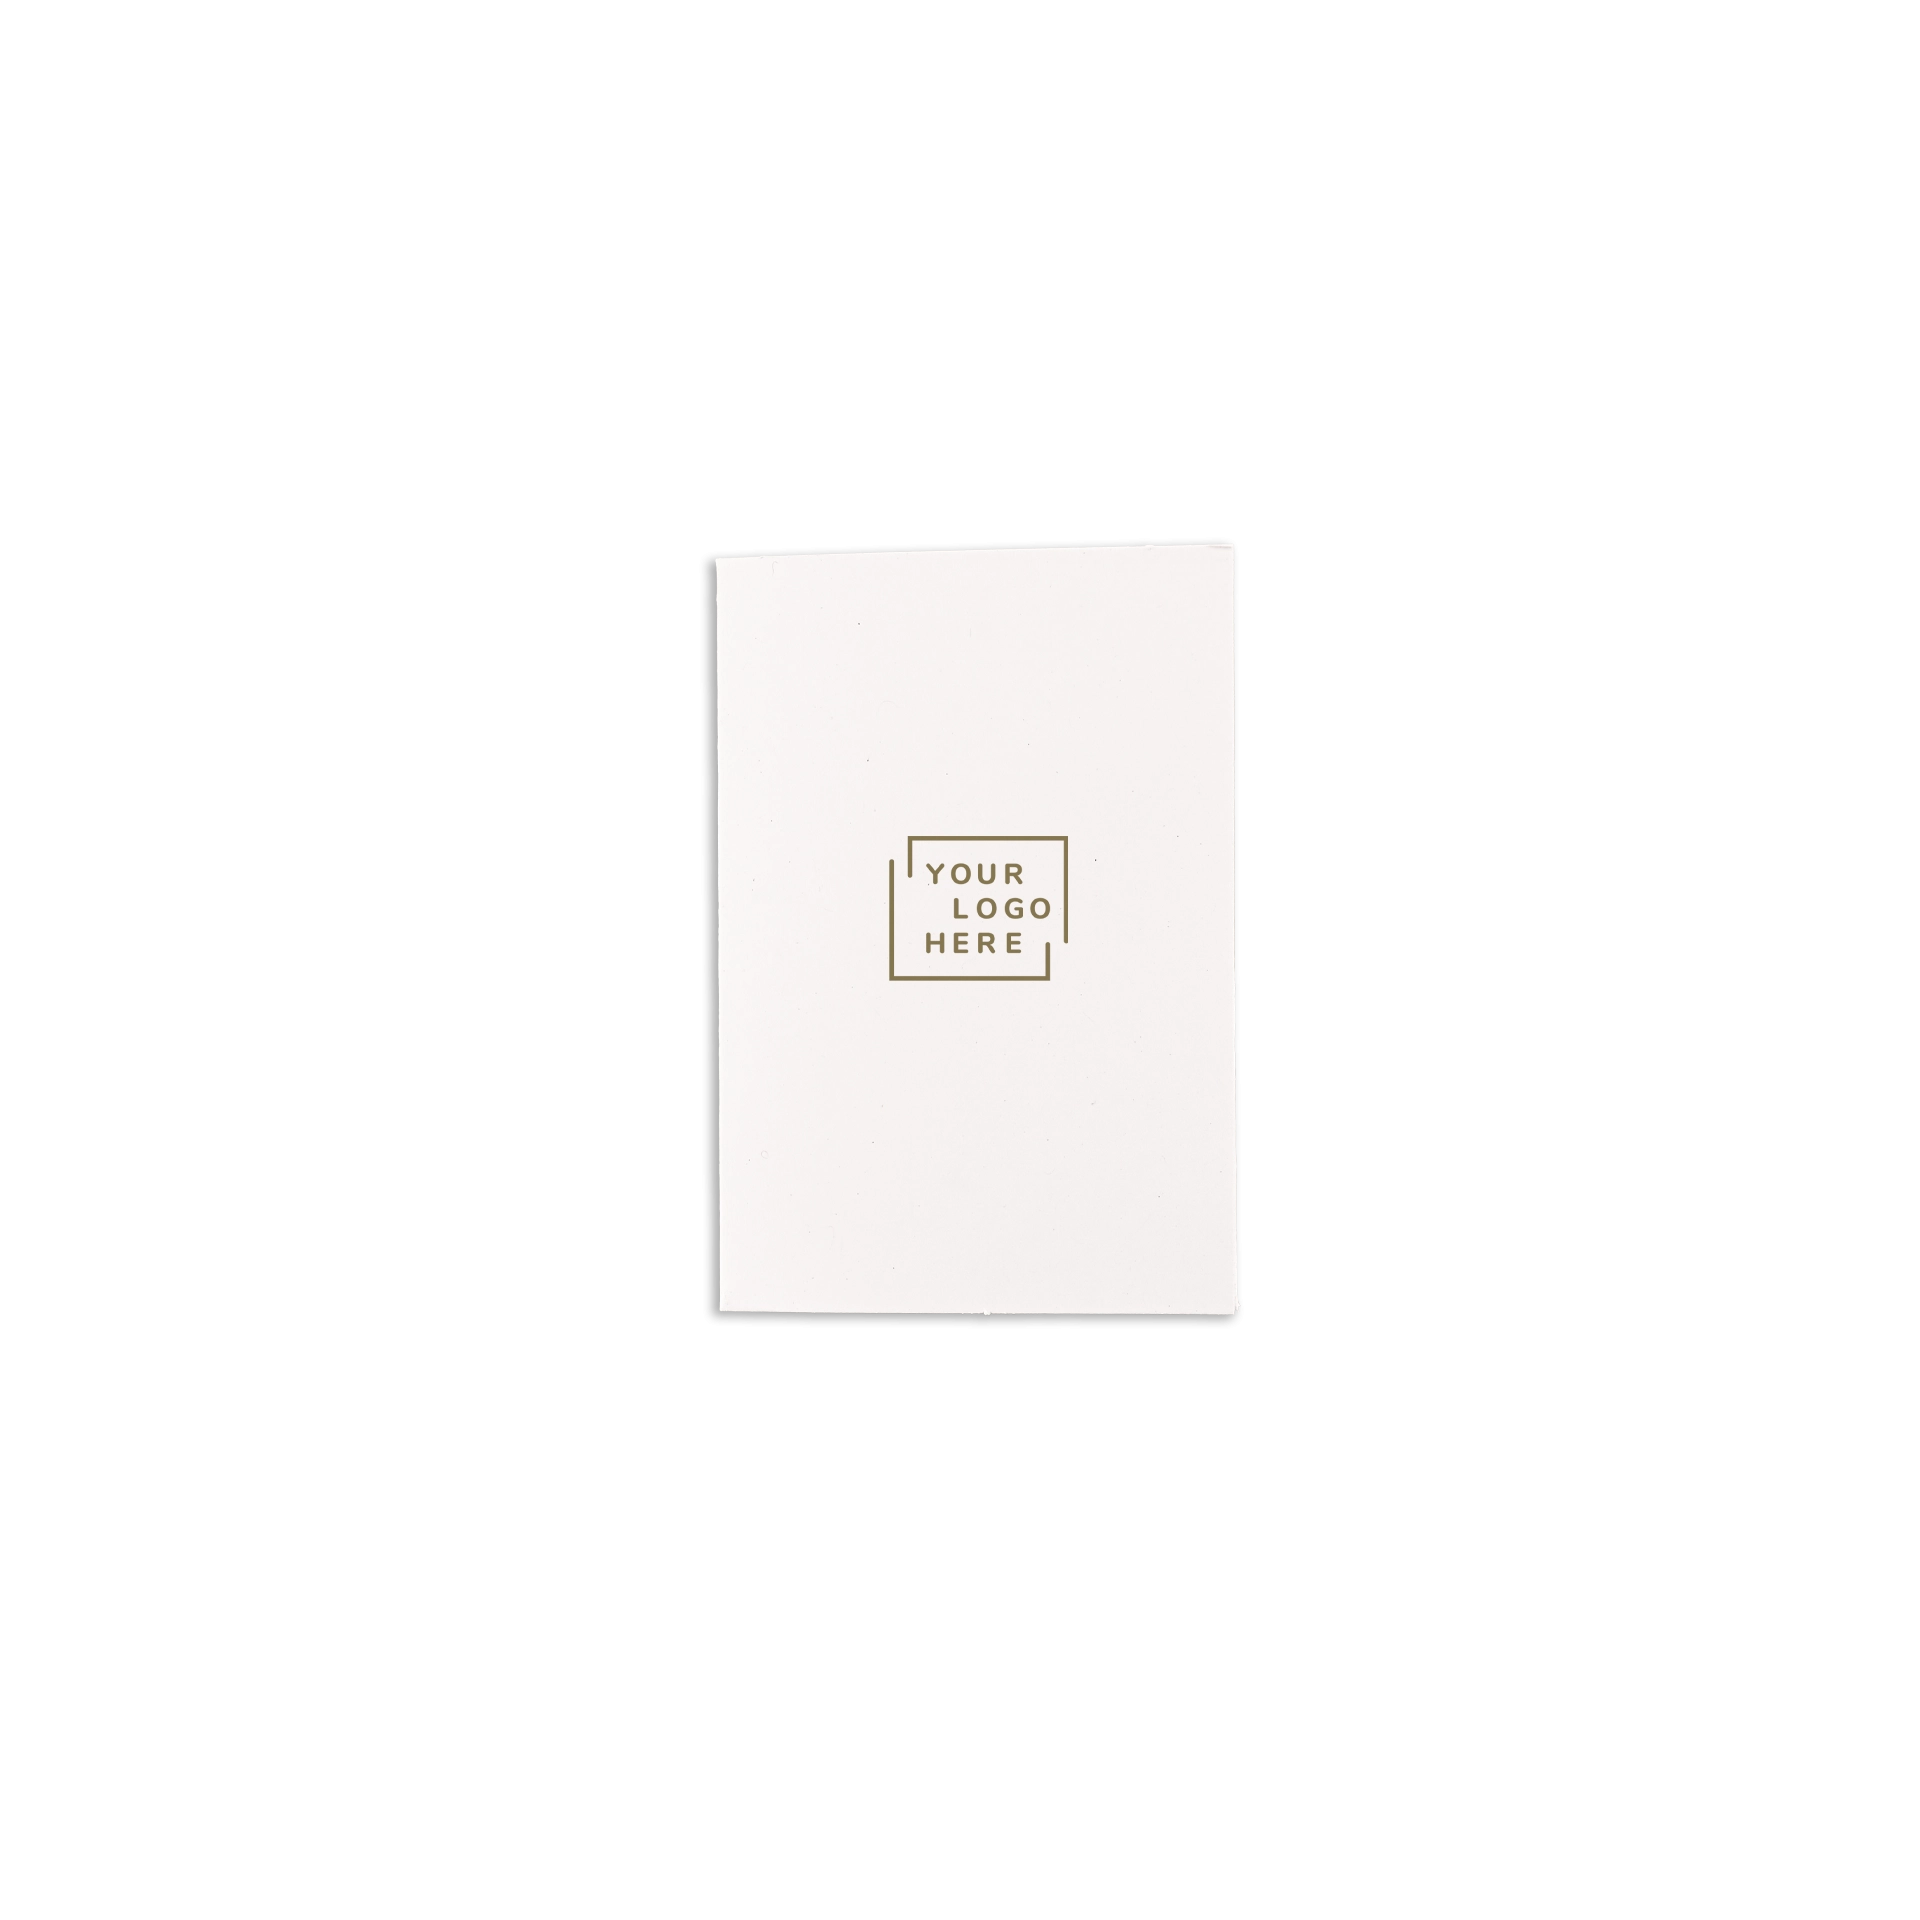 Astuccio keycard | D1 carta patinata opaca oppure carta uso mano